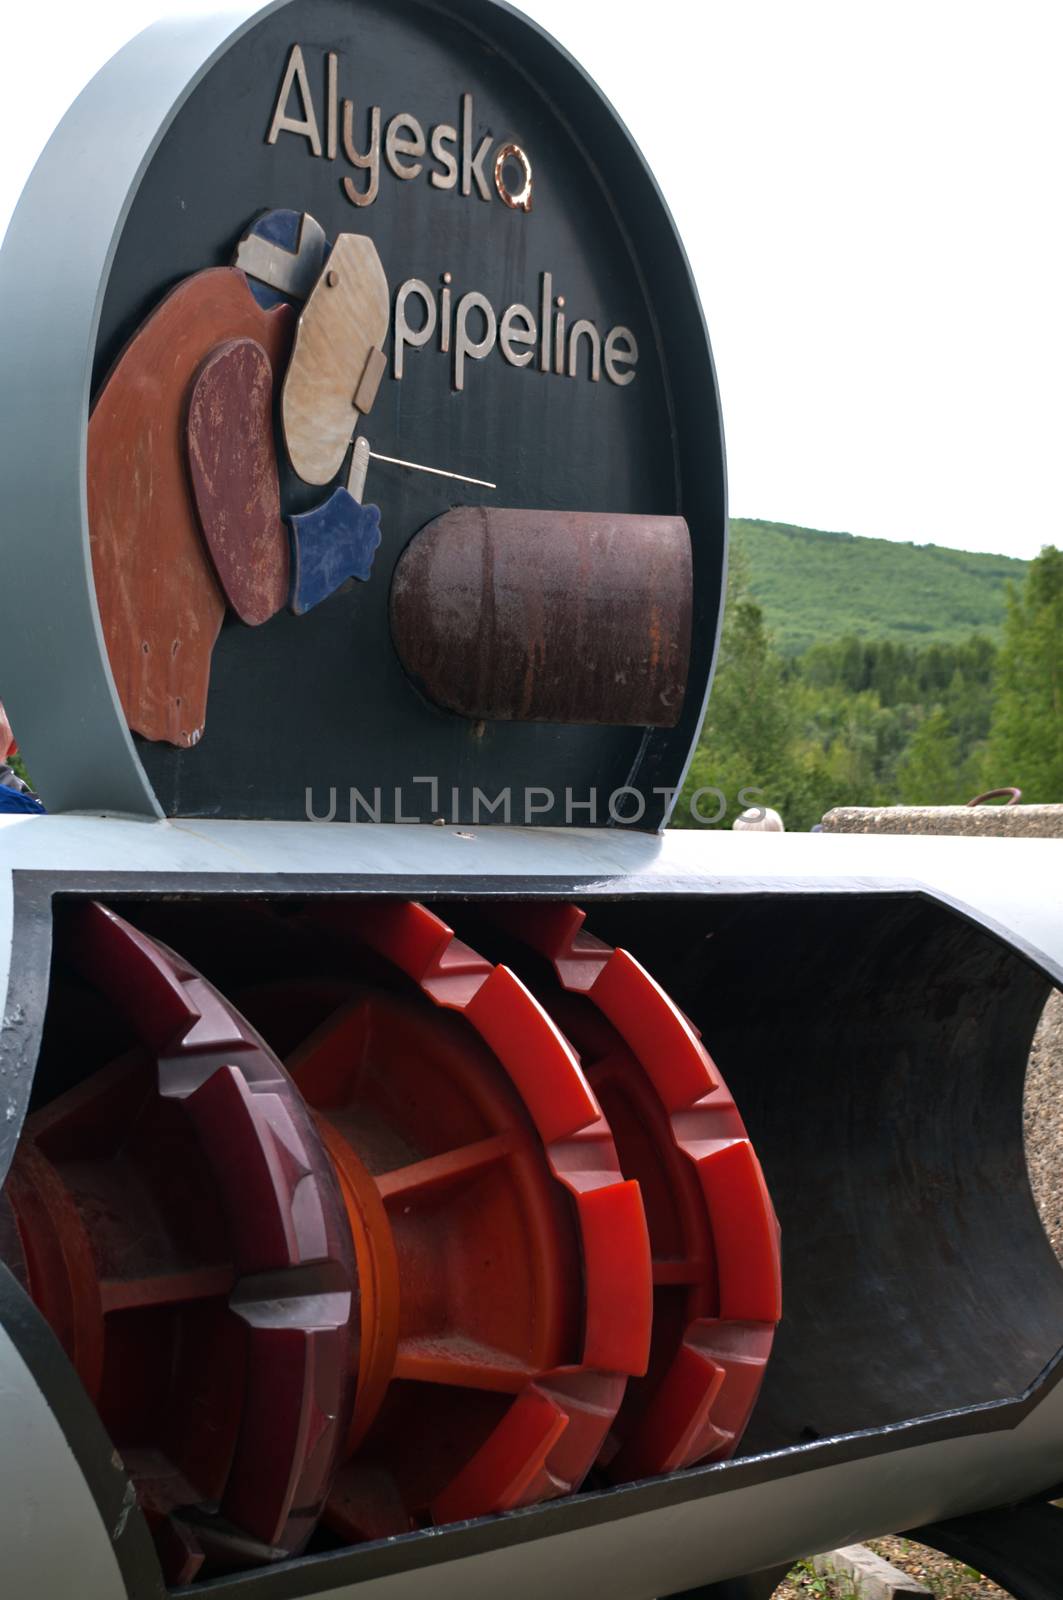 Alyeska Pipeline cleaner demo